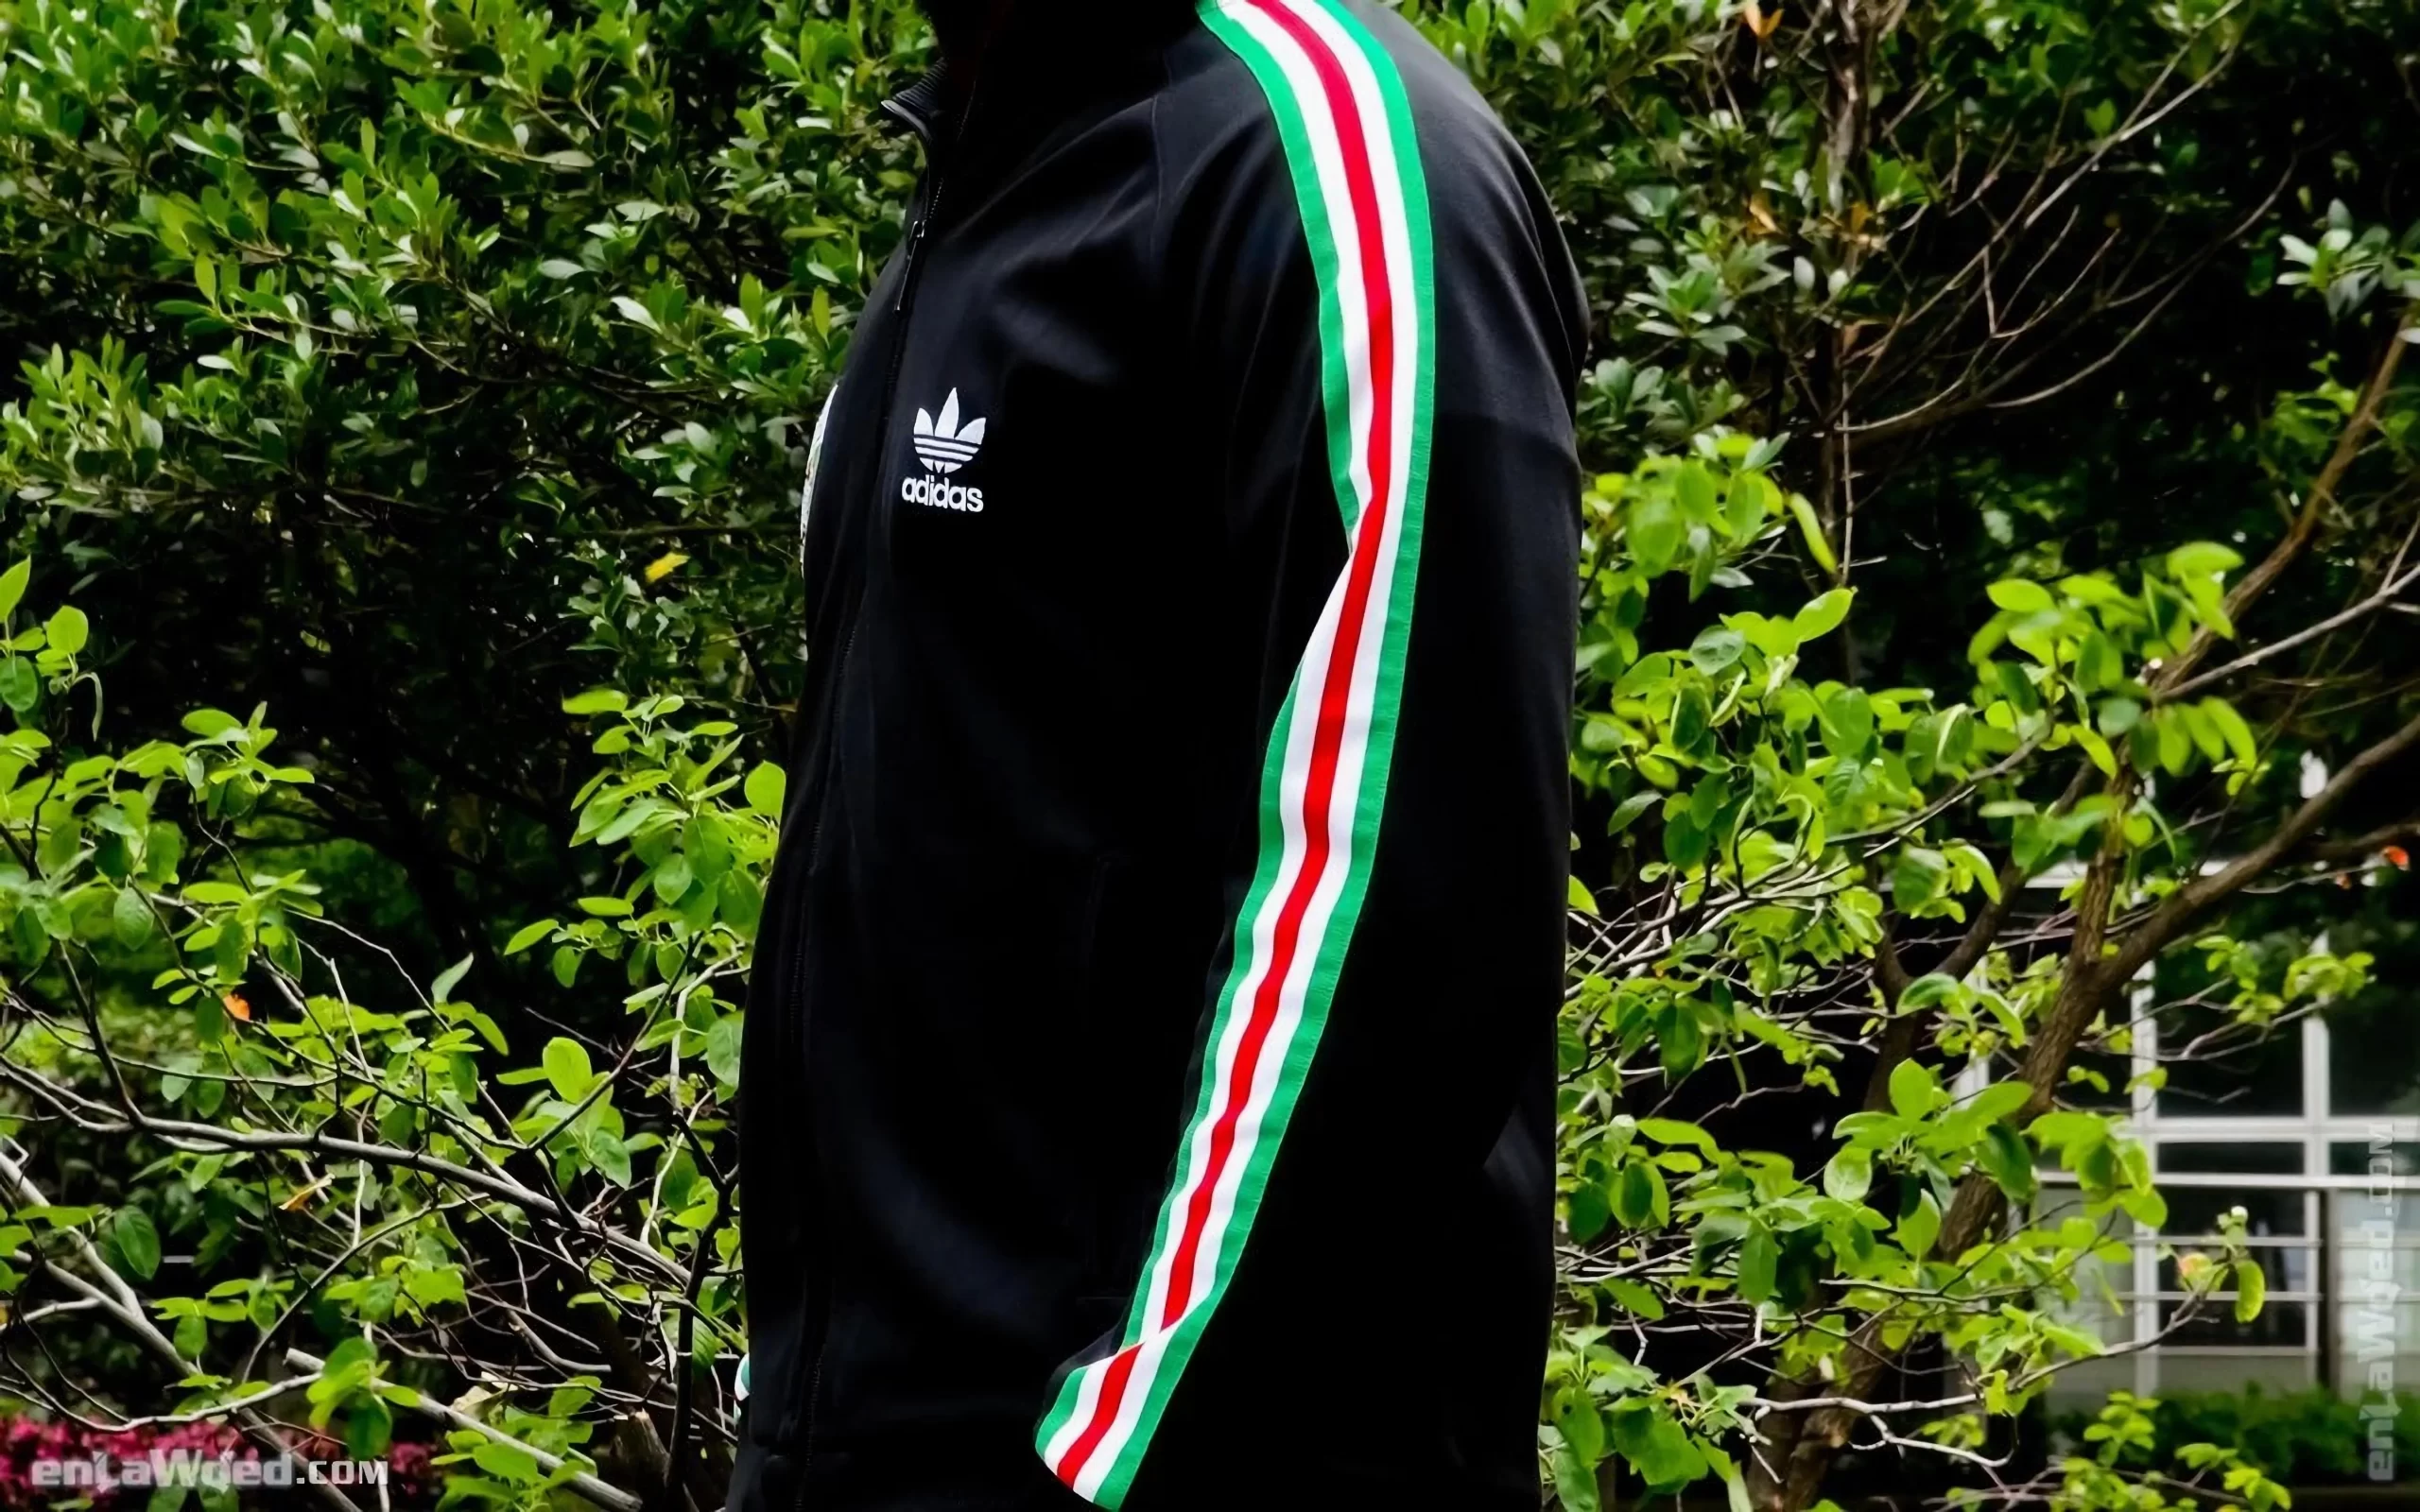 Men’s 2007 Kenya Harambee TT by Adidas Originals: Breakthrough (EnLawded.com file #lmcgjchmaec7mh4l9k5)